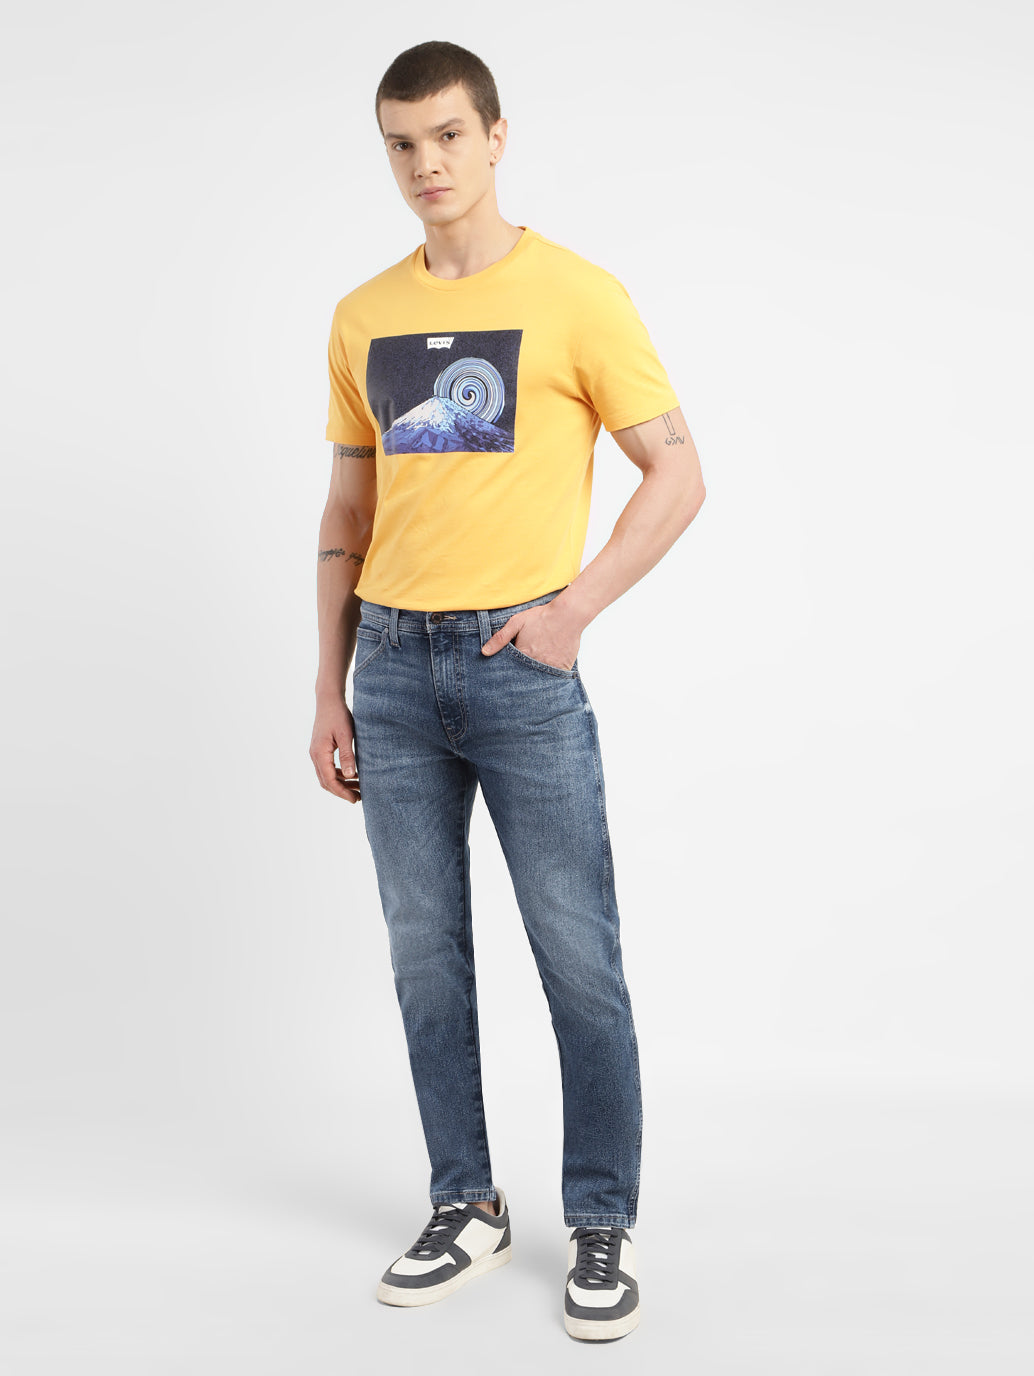 Men's 512 Slim Tapered Fit Jeans